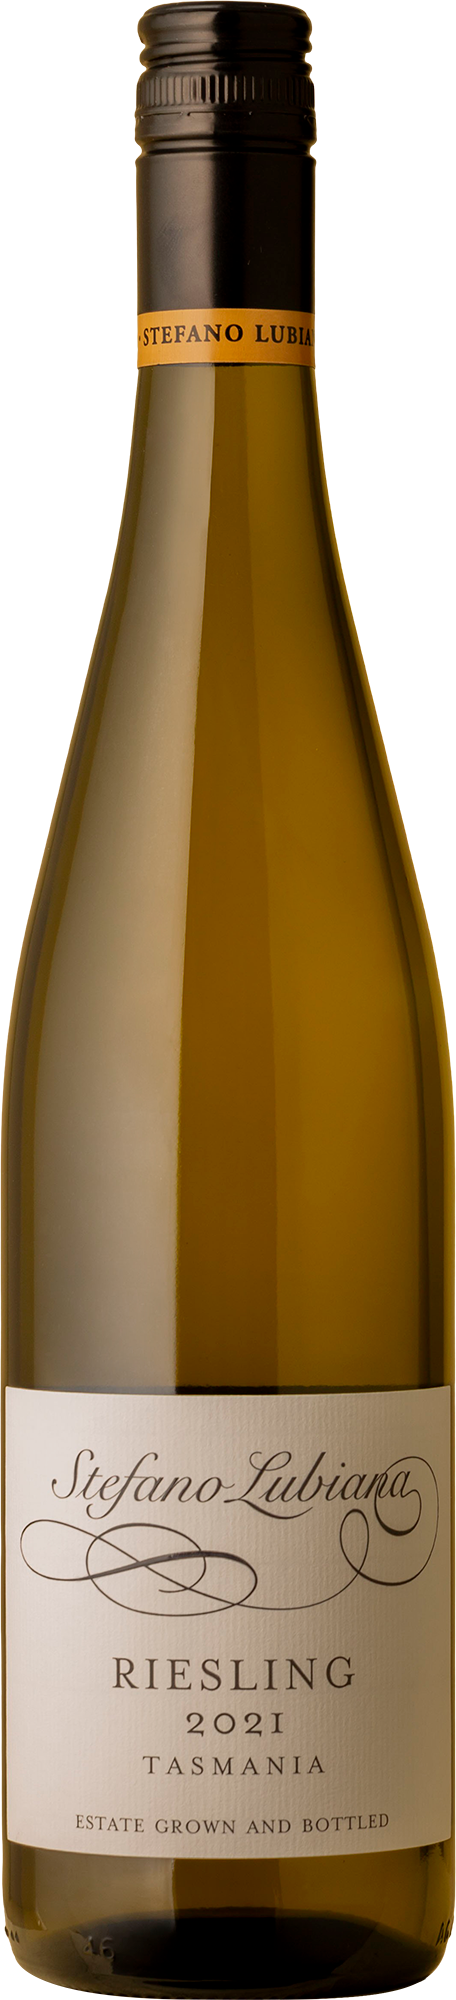 Stefano Lubiana - Riesling 2021 White Wine